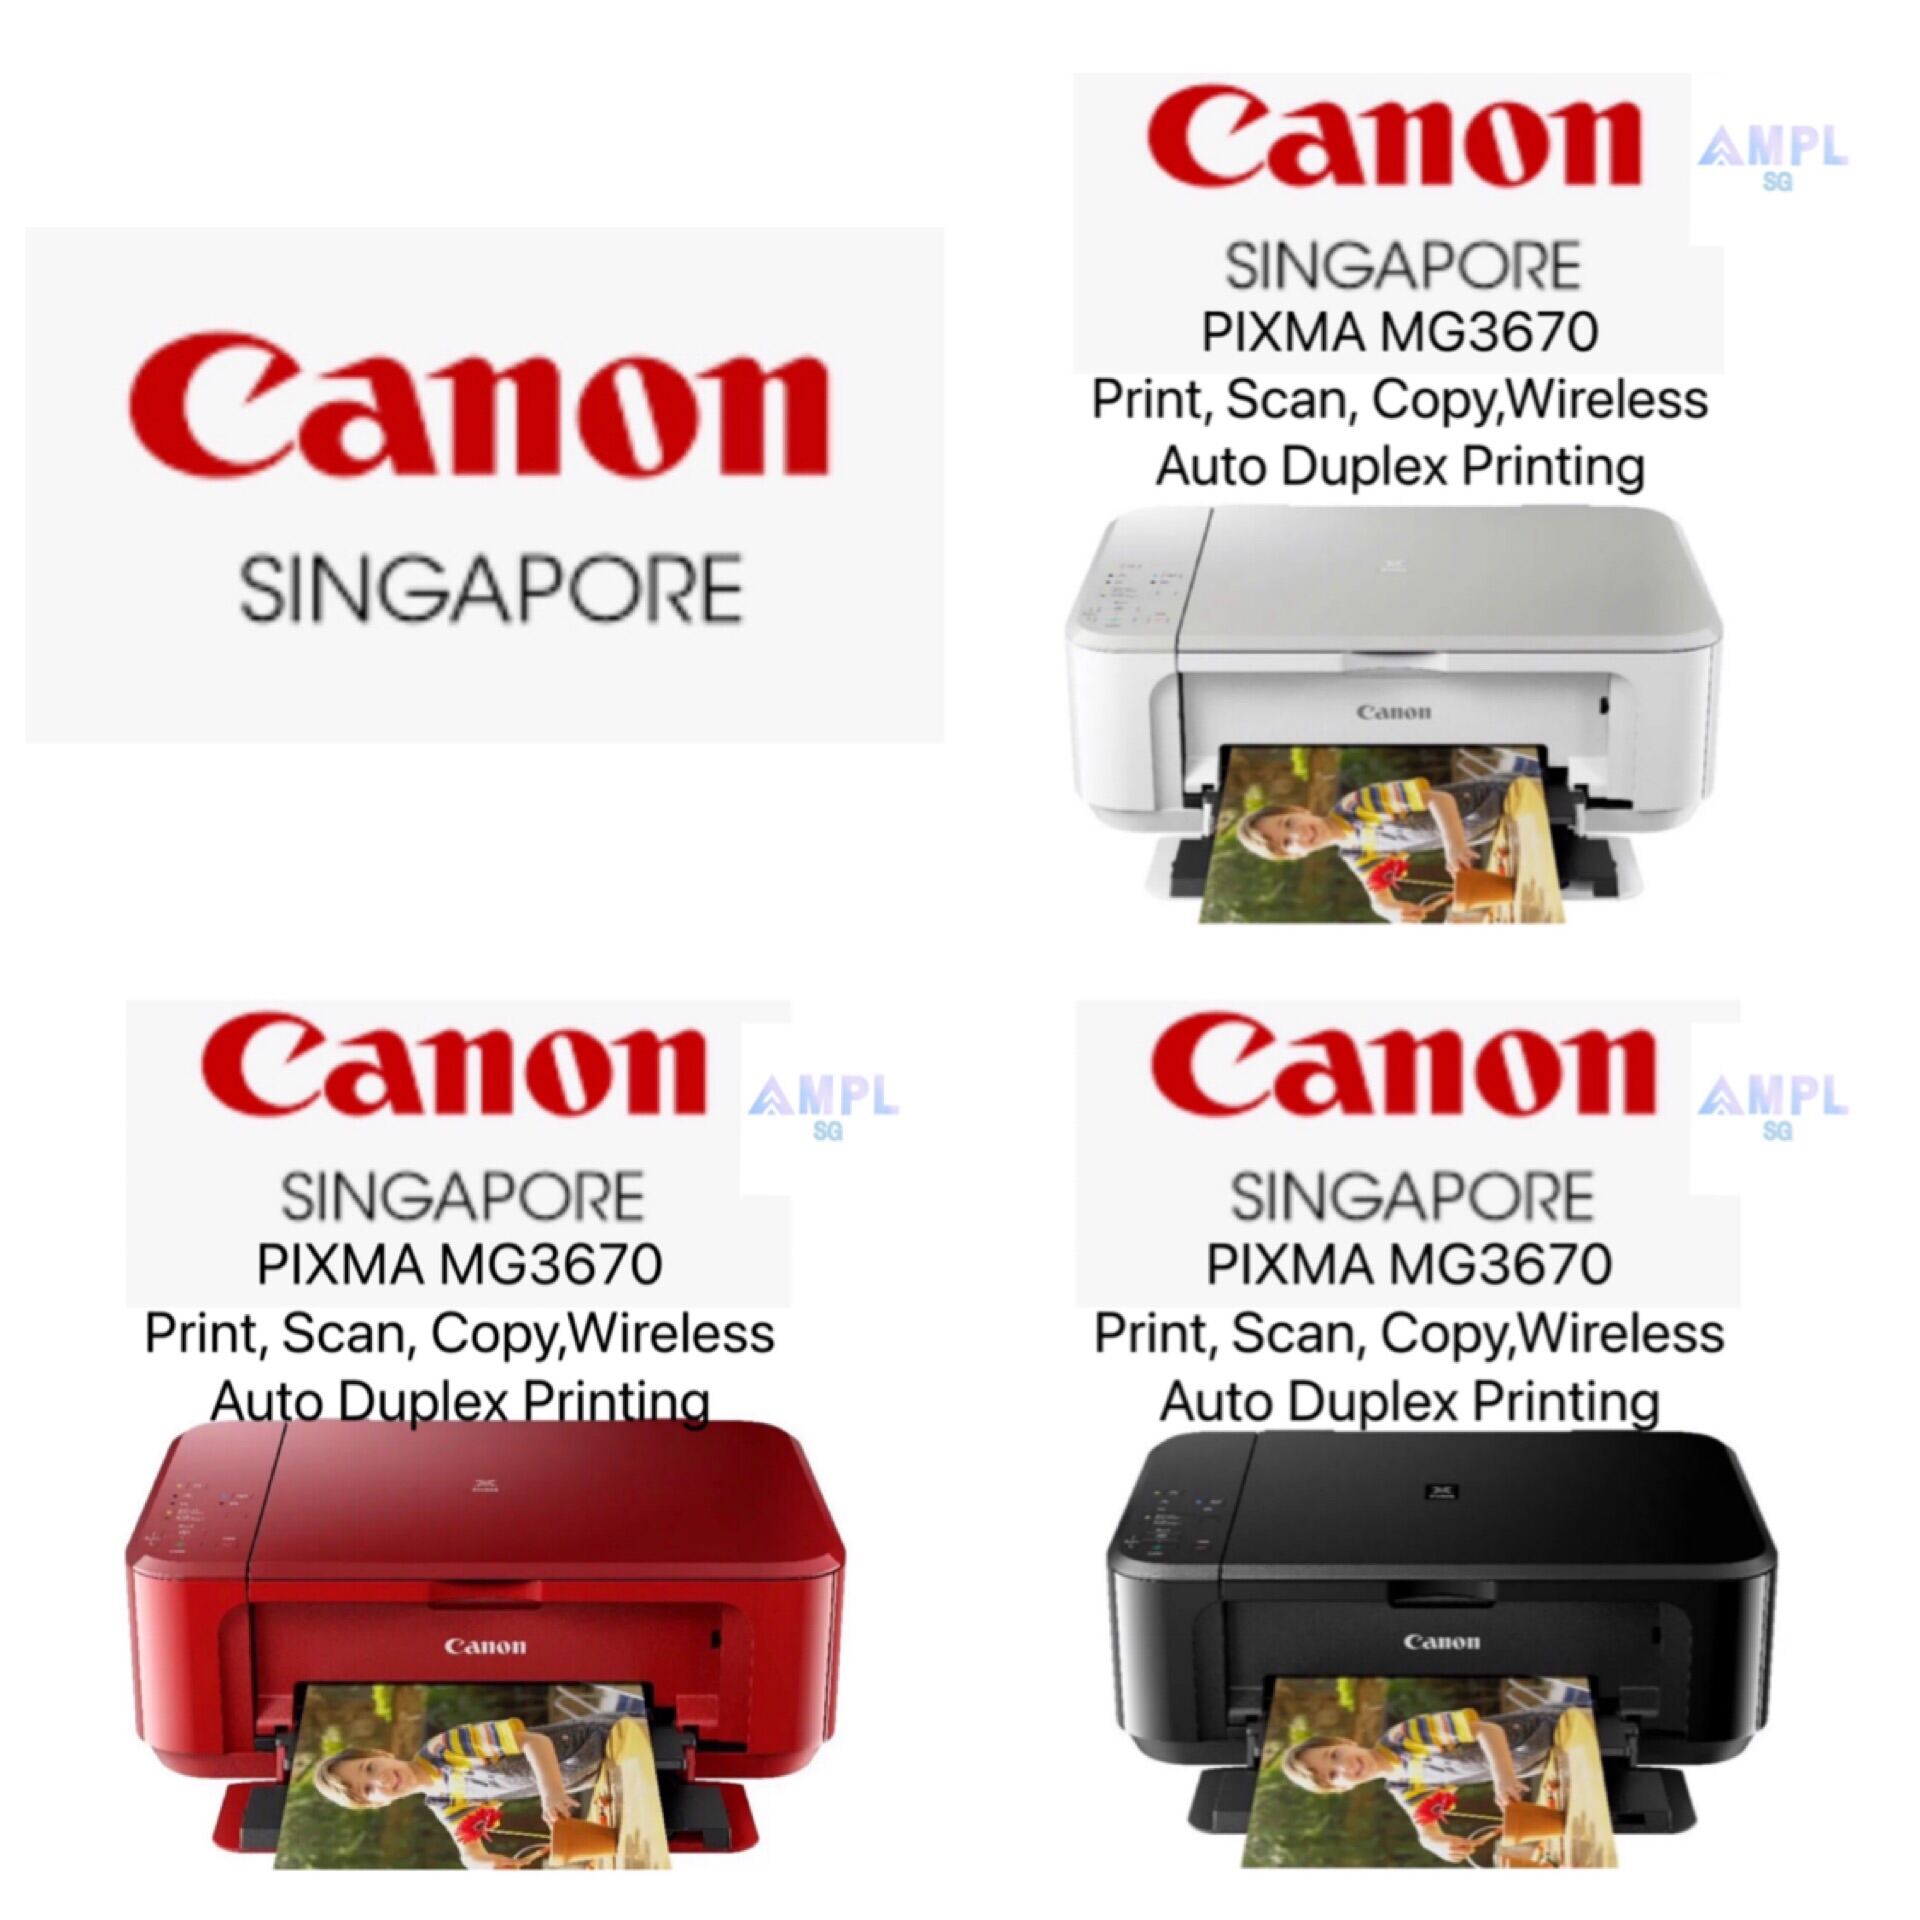 *Local Warranty*Canon MG3670 PIXMA Print,Scan,Copy,Wireless,2-sided Printing MG3670 MG-3670 MG 3670 Singapore